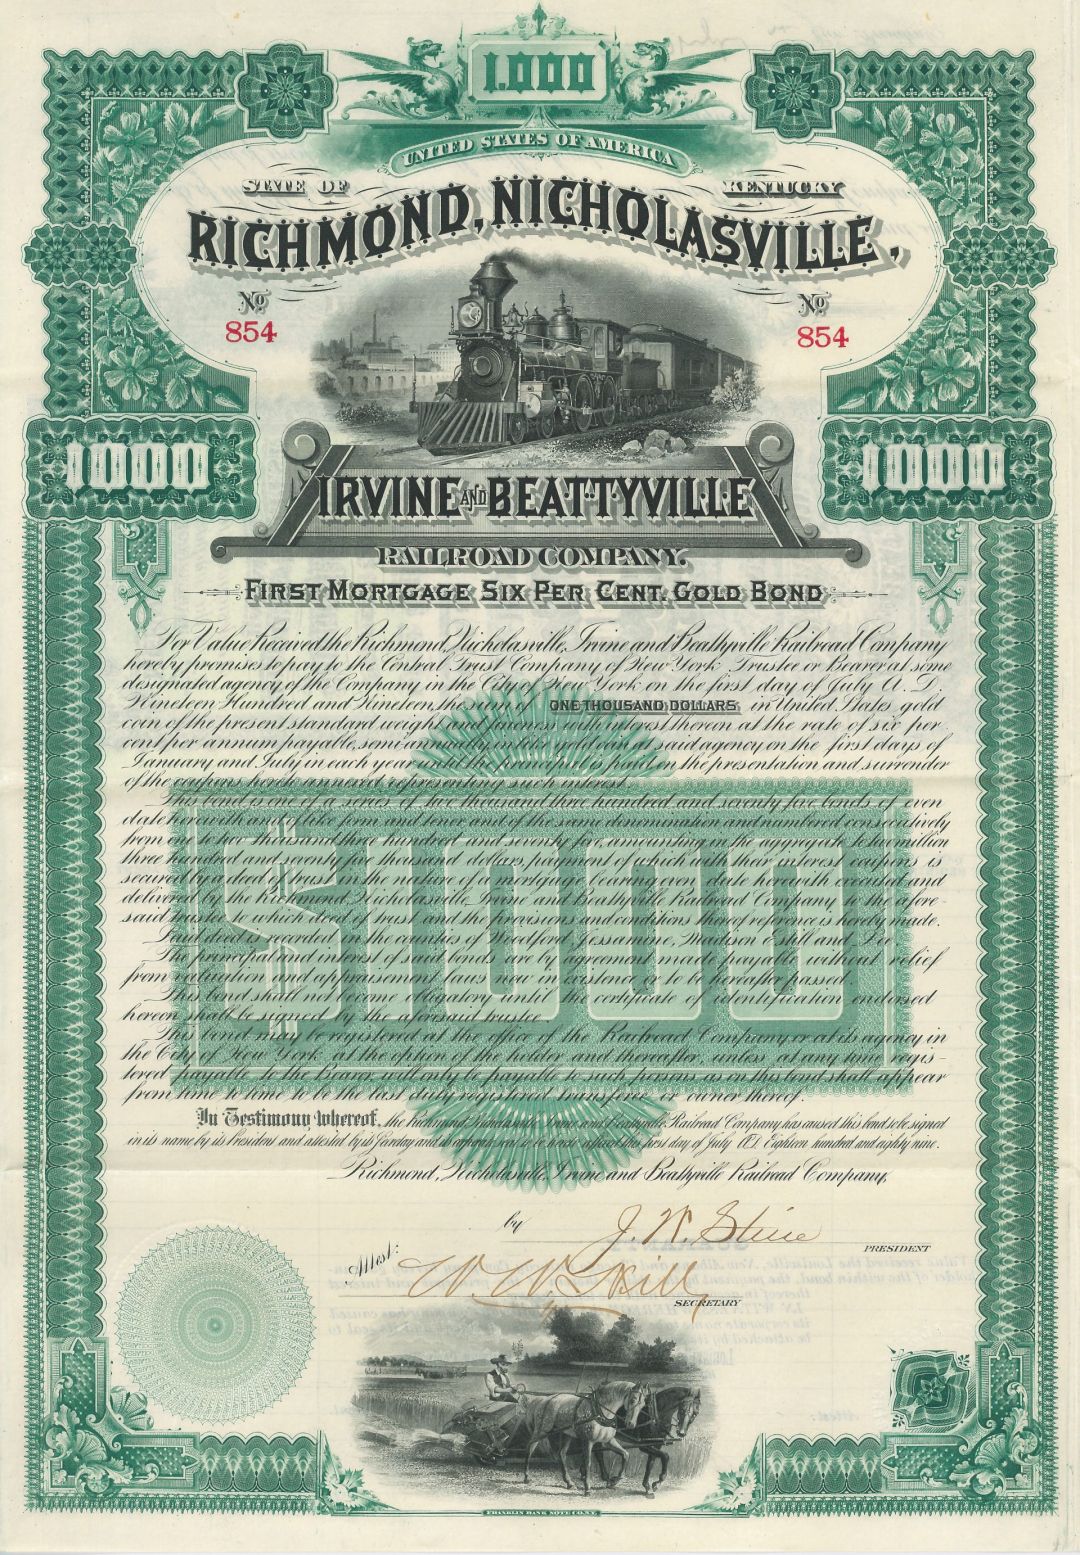 Richmond, Nicholasville, Irvine and Beattyville Railroad - 1889 dated Railway Gold Bond (Uncanceled)